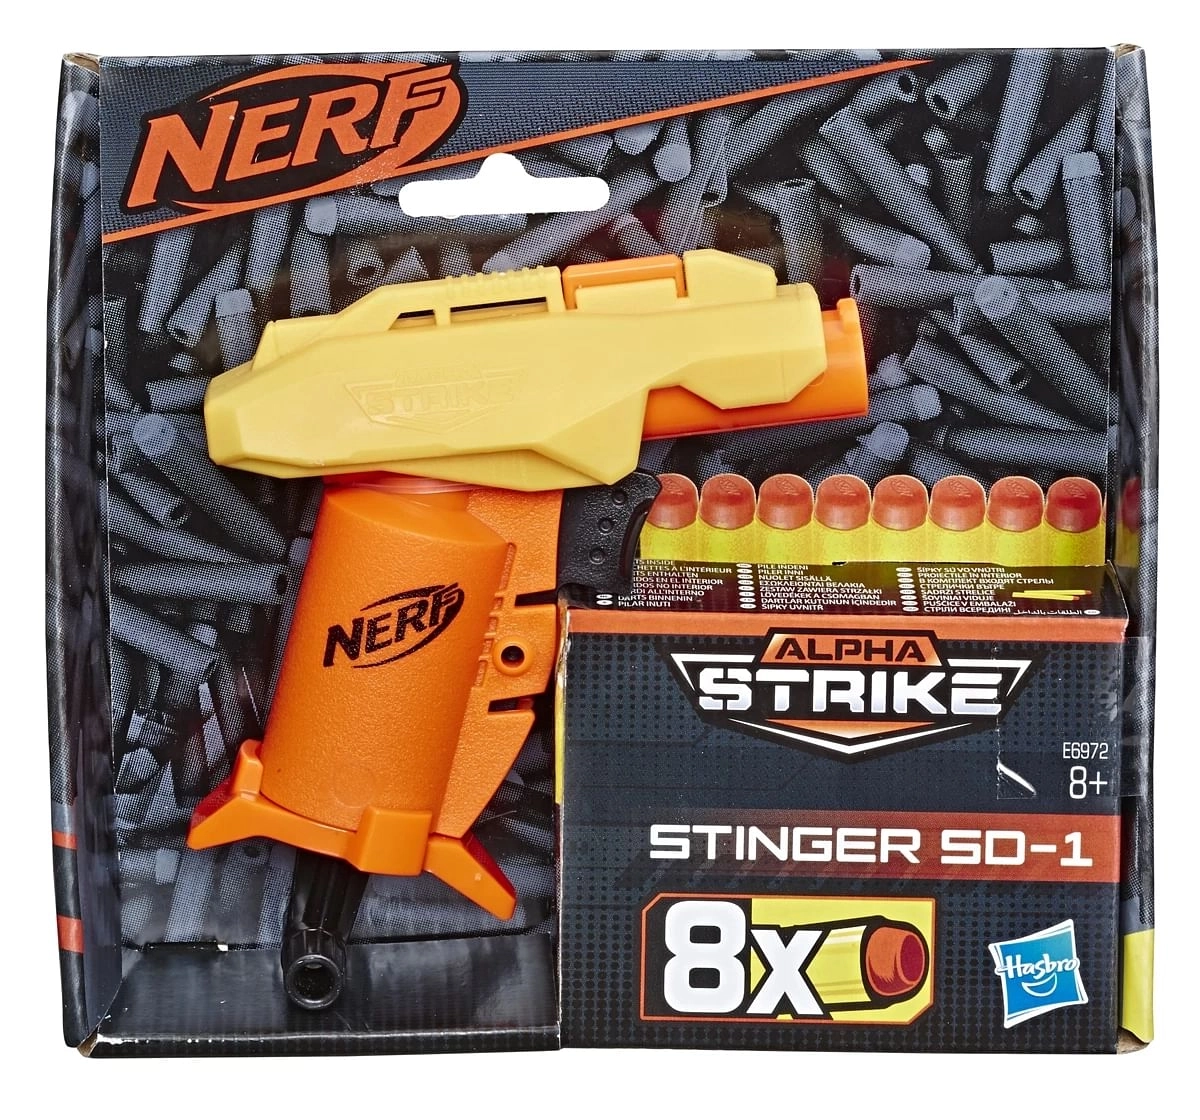 Nerf Alpha Strike Stinger SD 1 Blaster Single Fire Pullback Priming Handle for Kids 8Y+, Multicolour